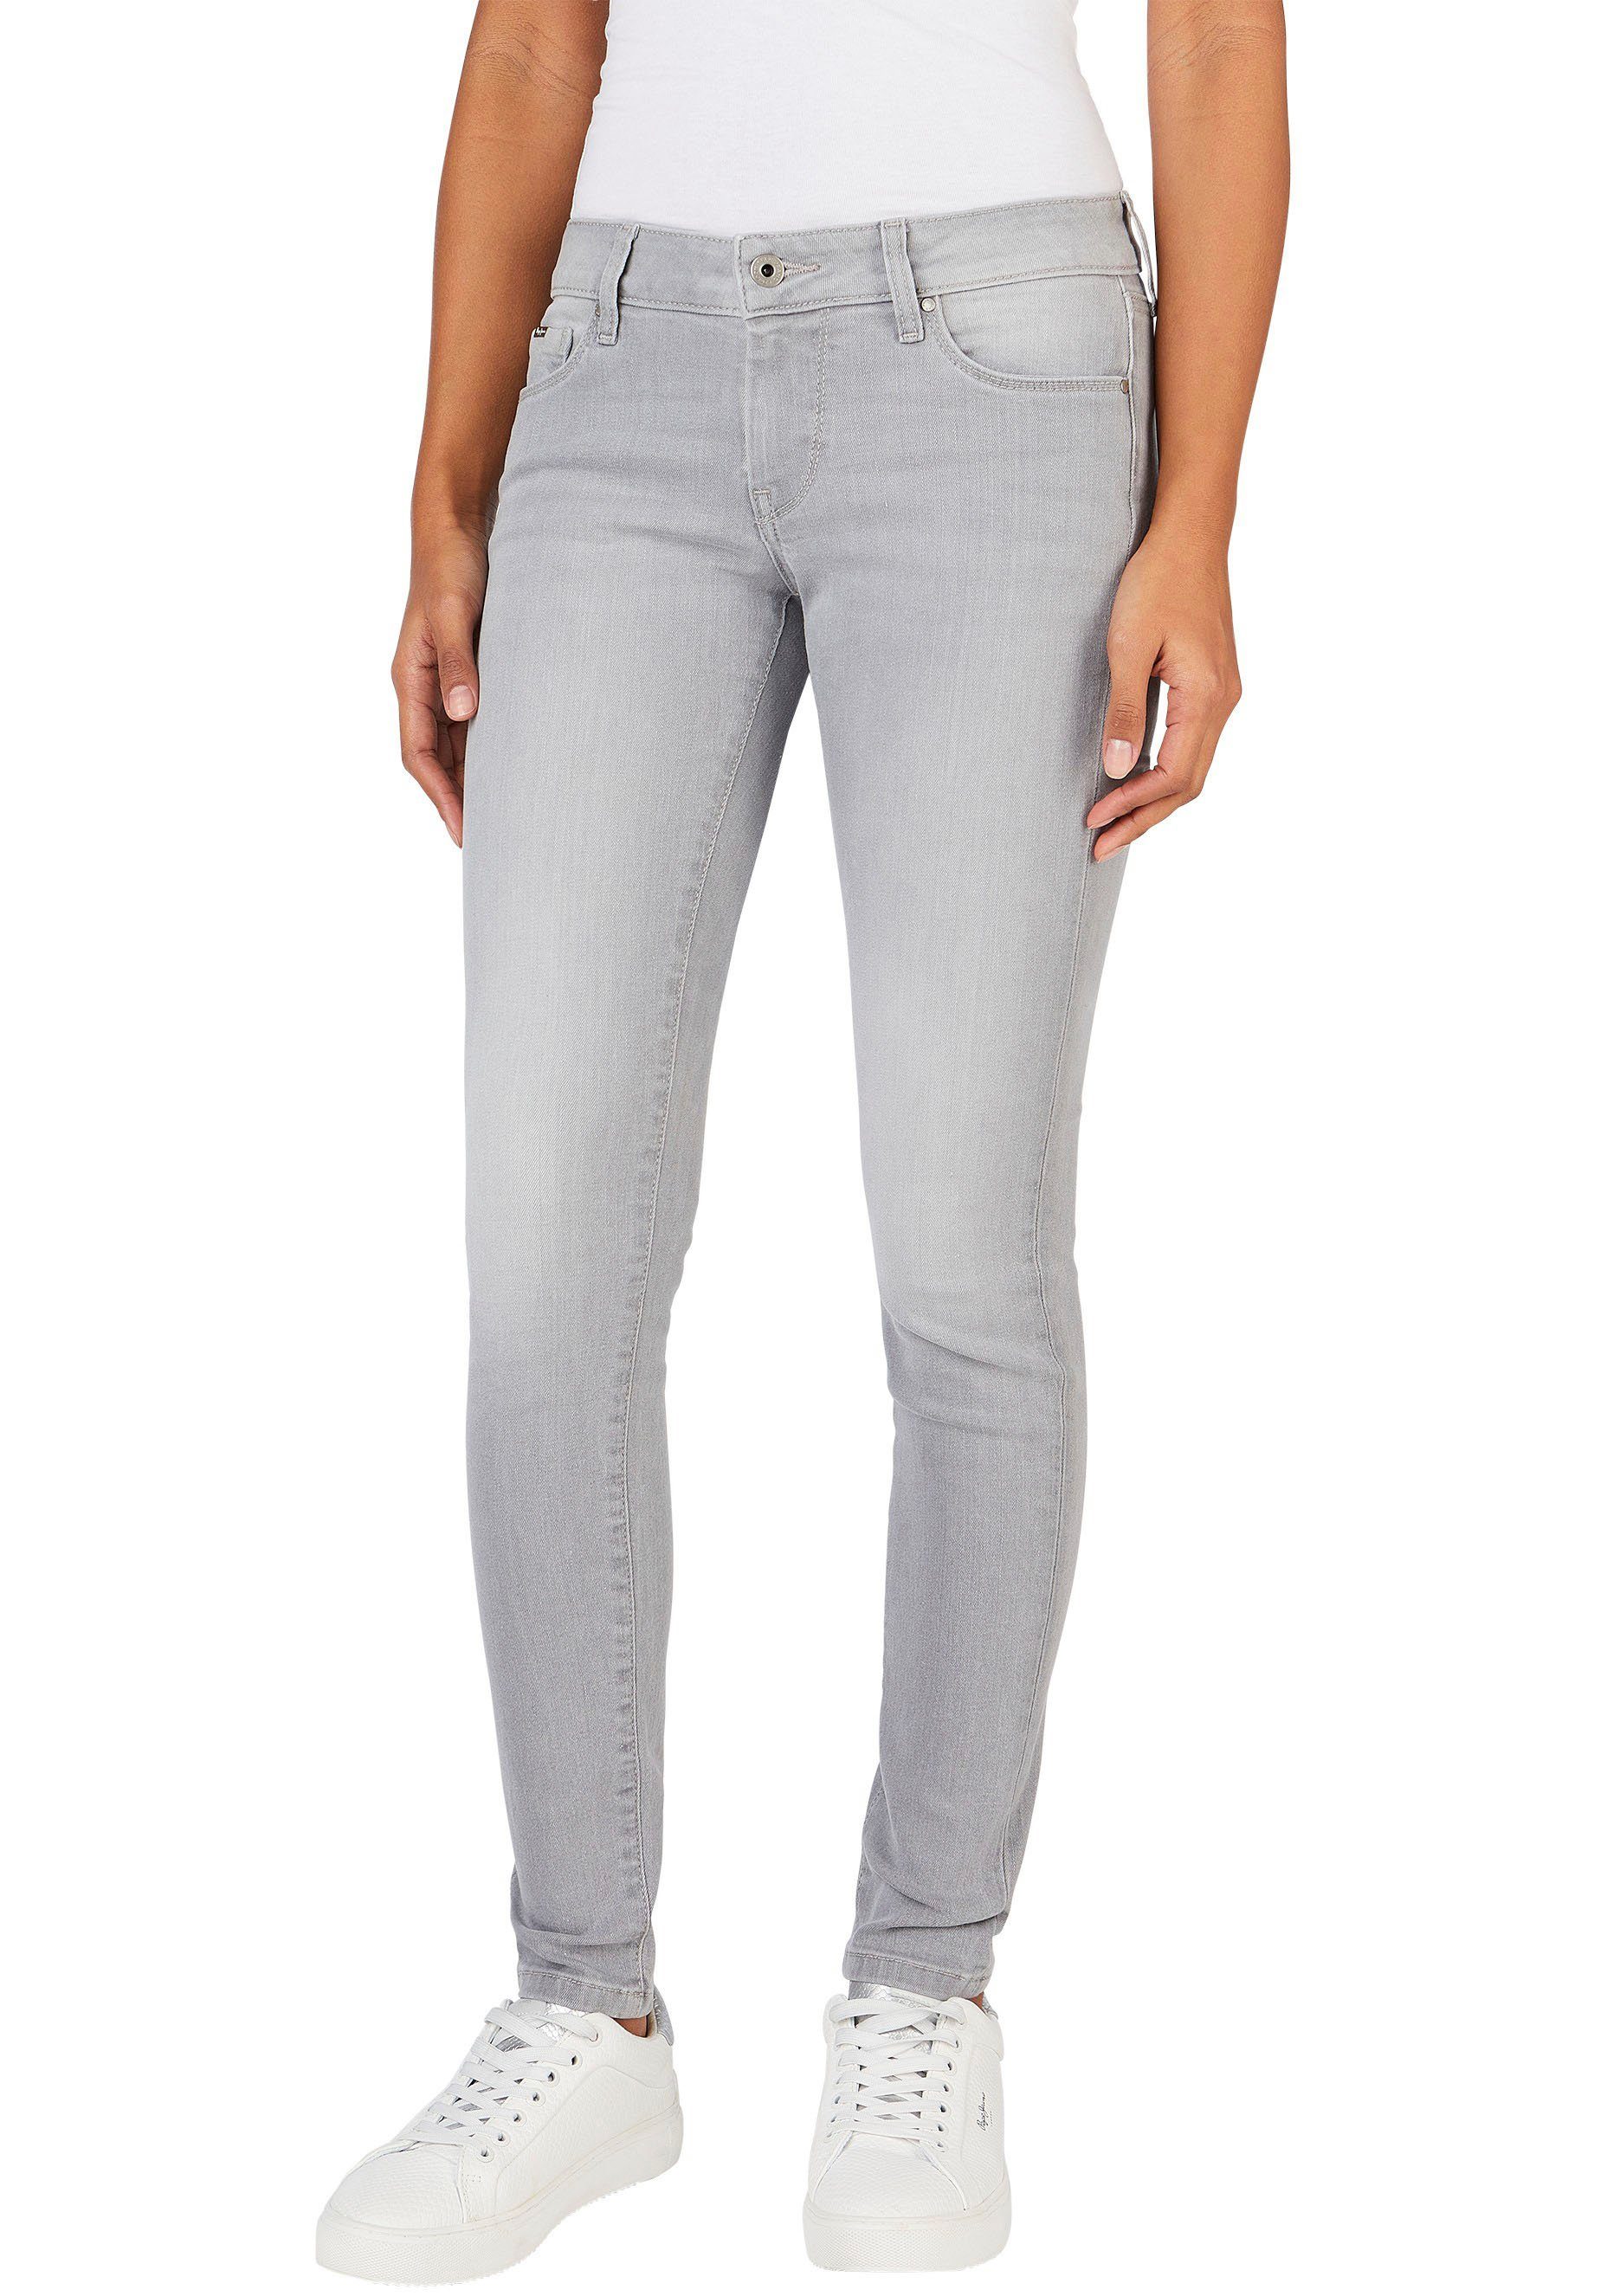 Skinny-fit-Jeans Pepe 5-Pocket-Stil SOHO mit und Bund Jeans grey light Stretch-Anteil im 1-Knopf